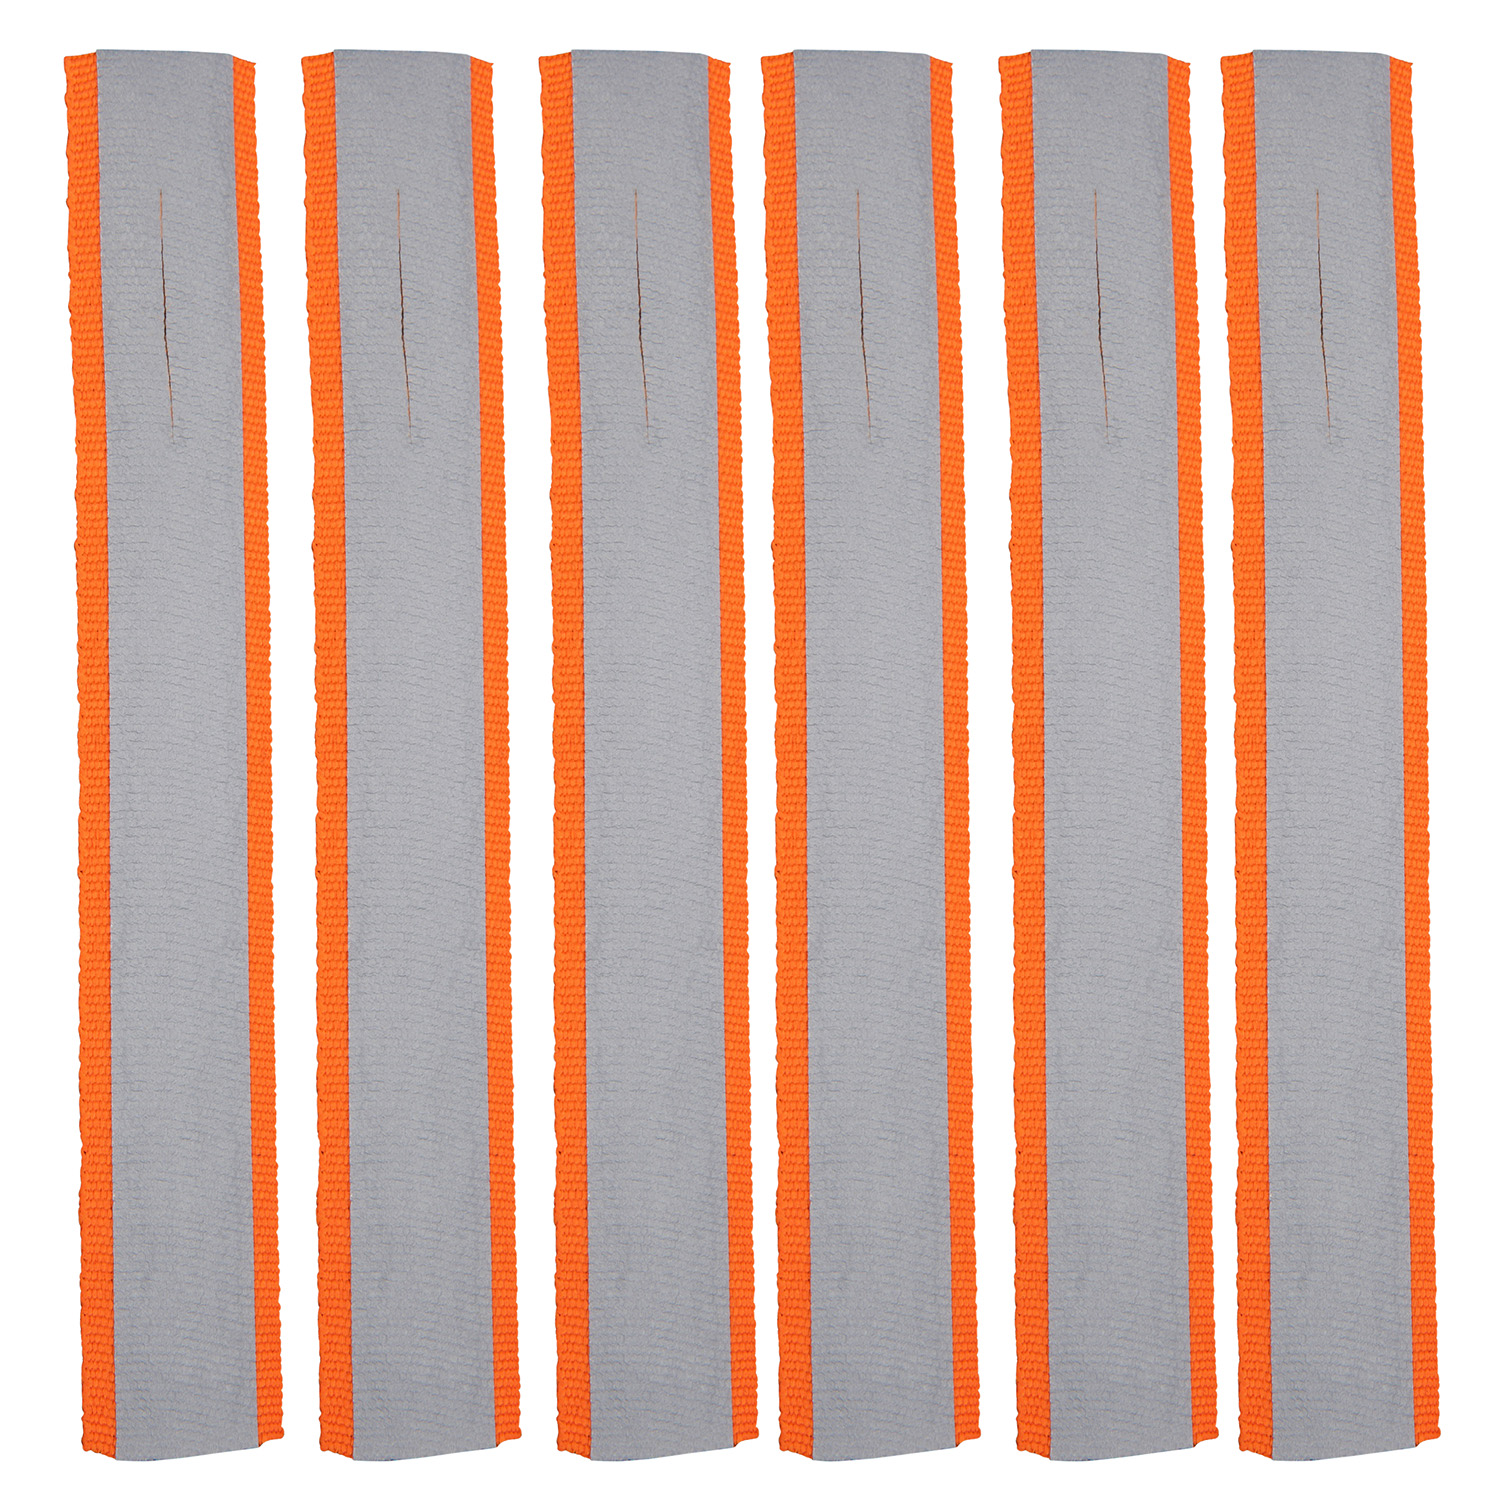 Allen 458 Flagging Strips  Orange Polyester Reflective 6